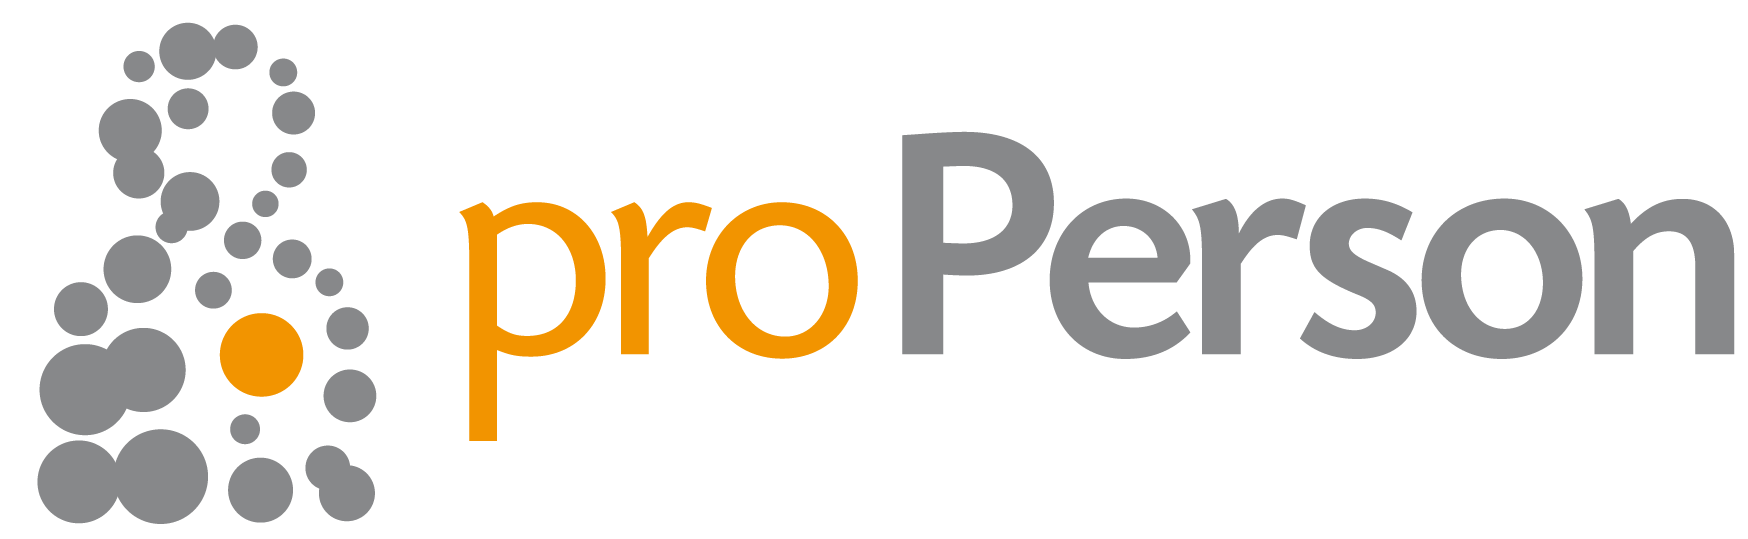 logo-properson